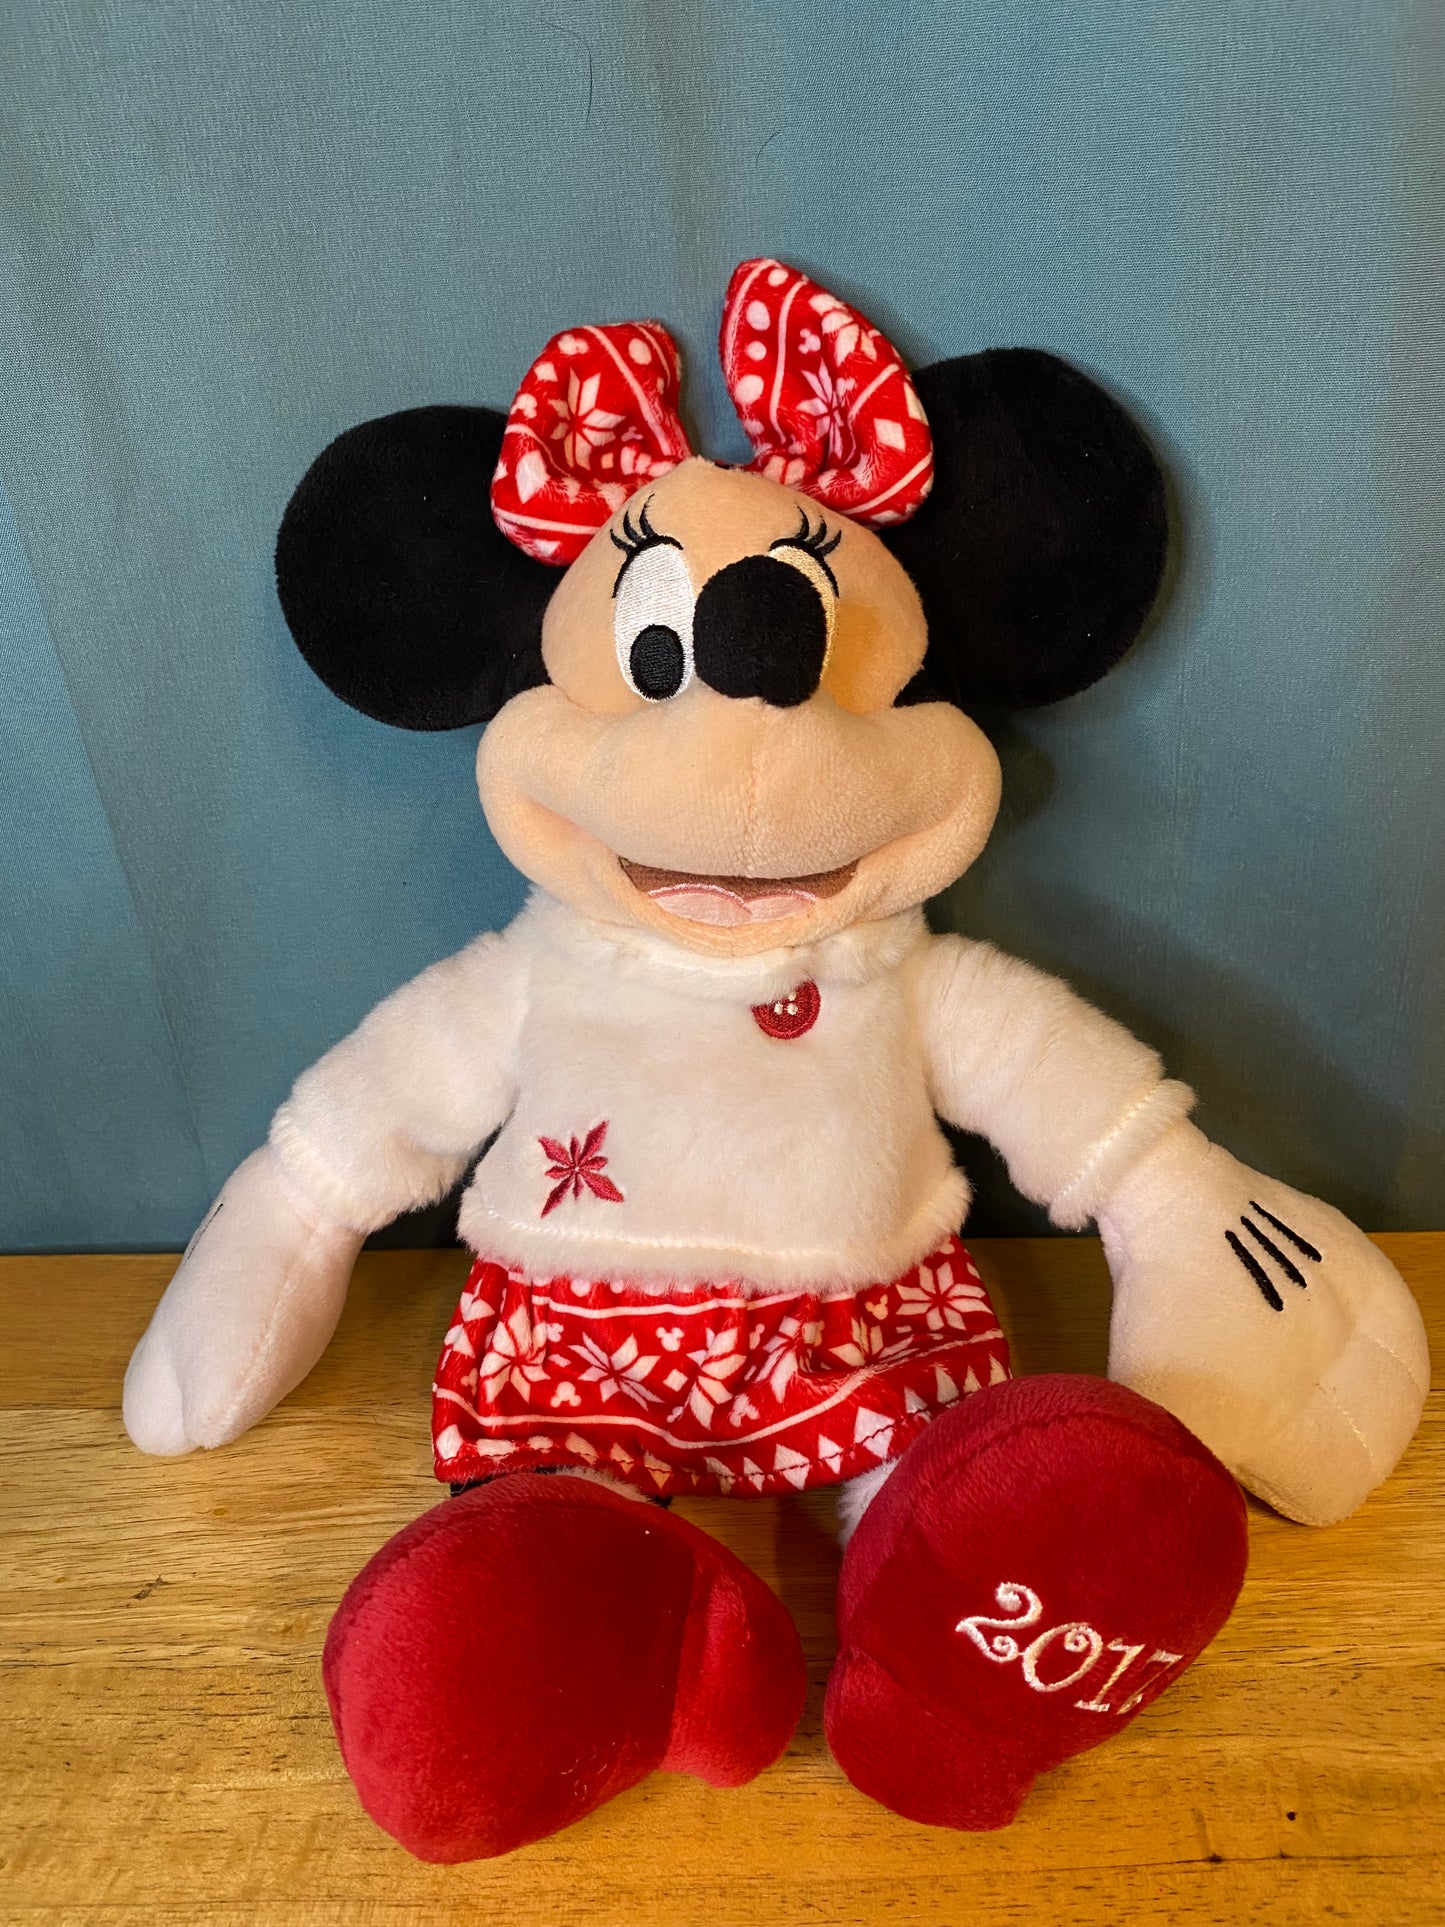 Minnie Mouse Plush